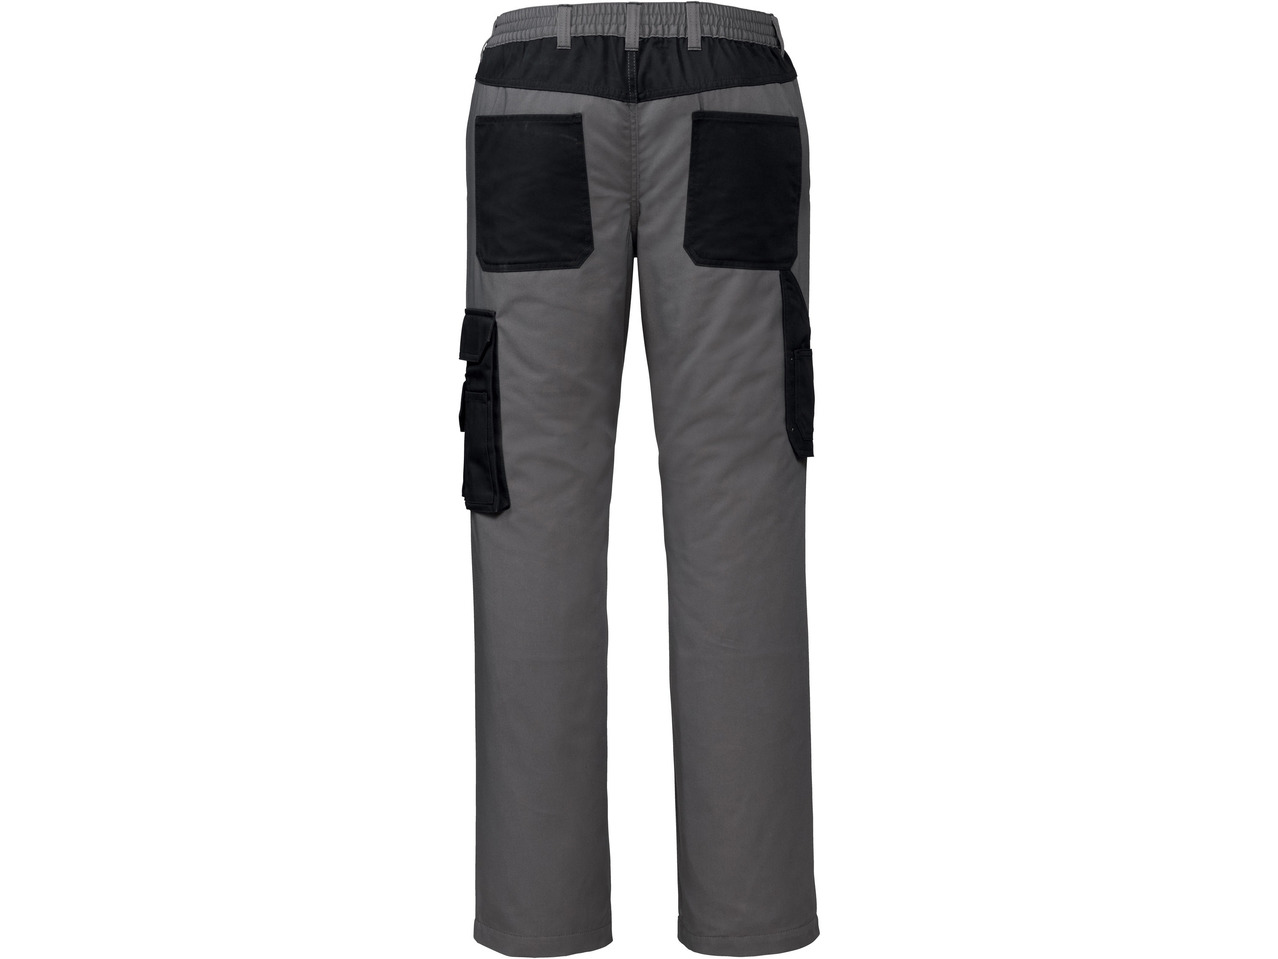 POWERFIX Men's Thermal Work Trousers